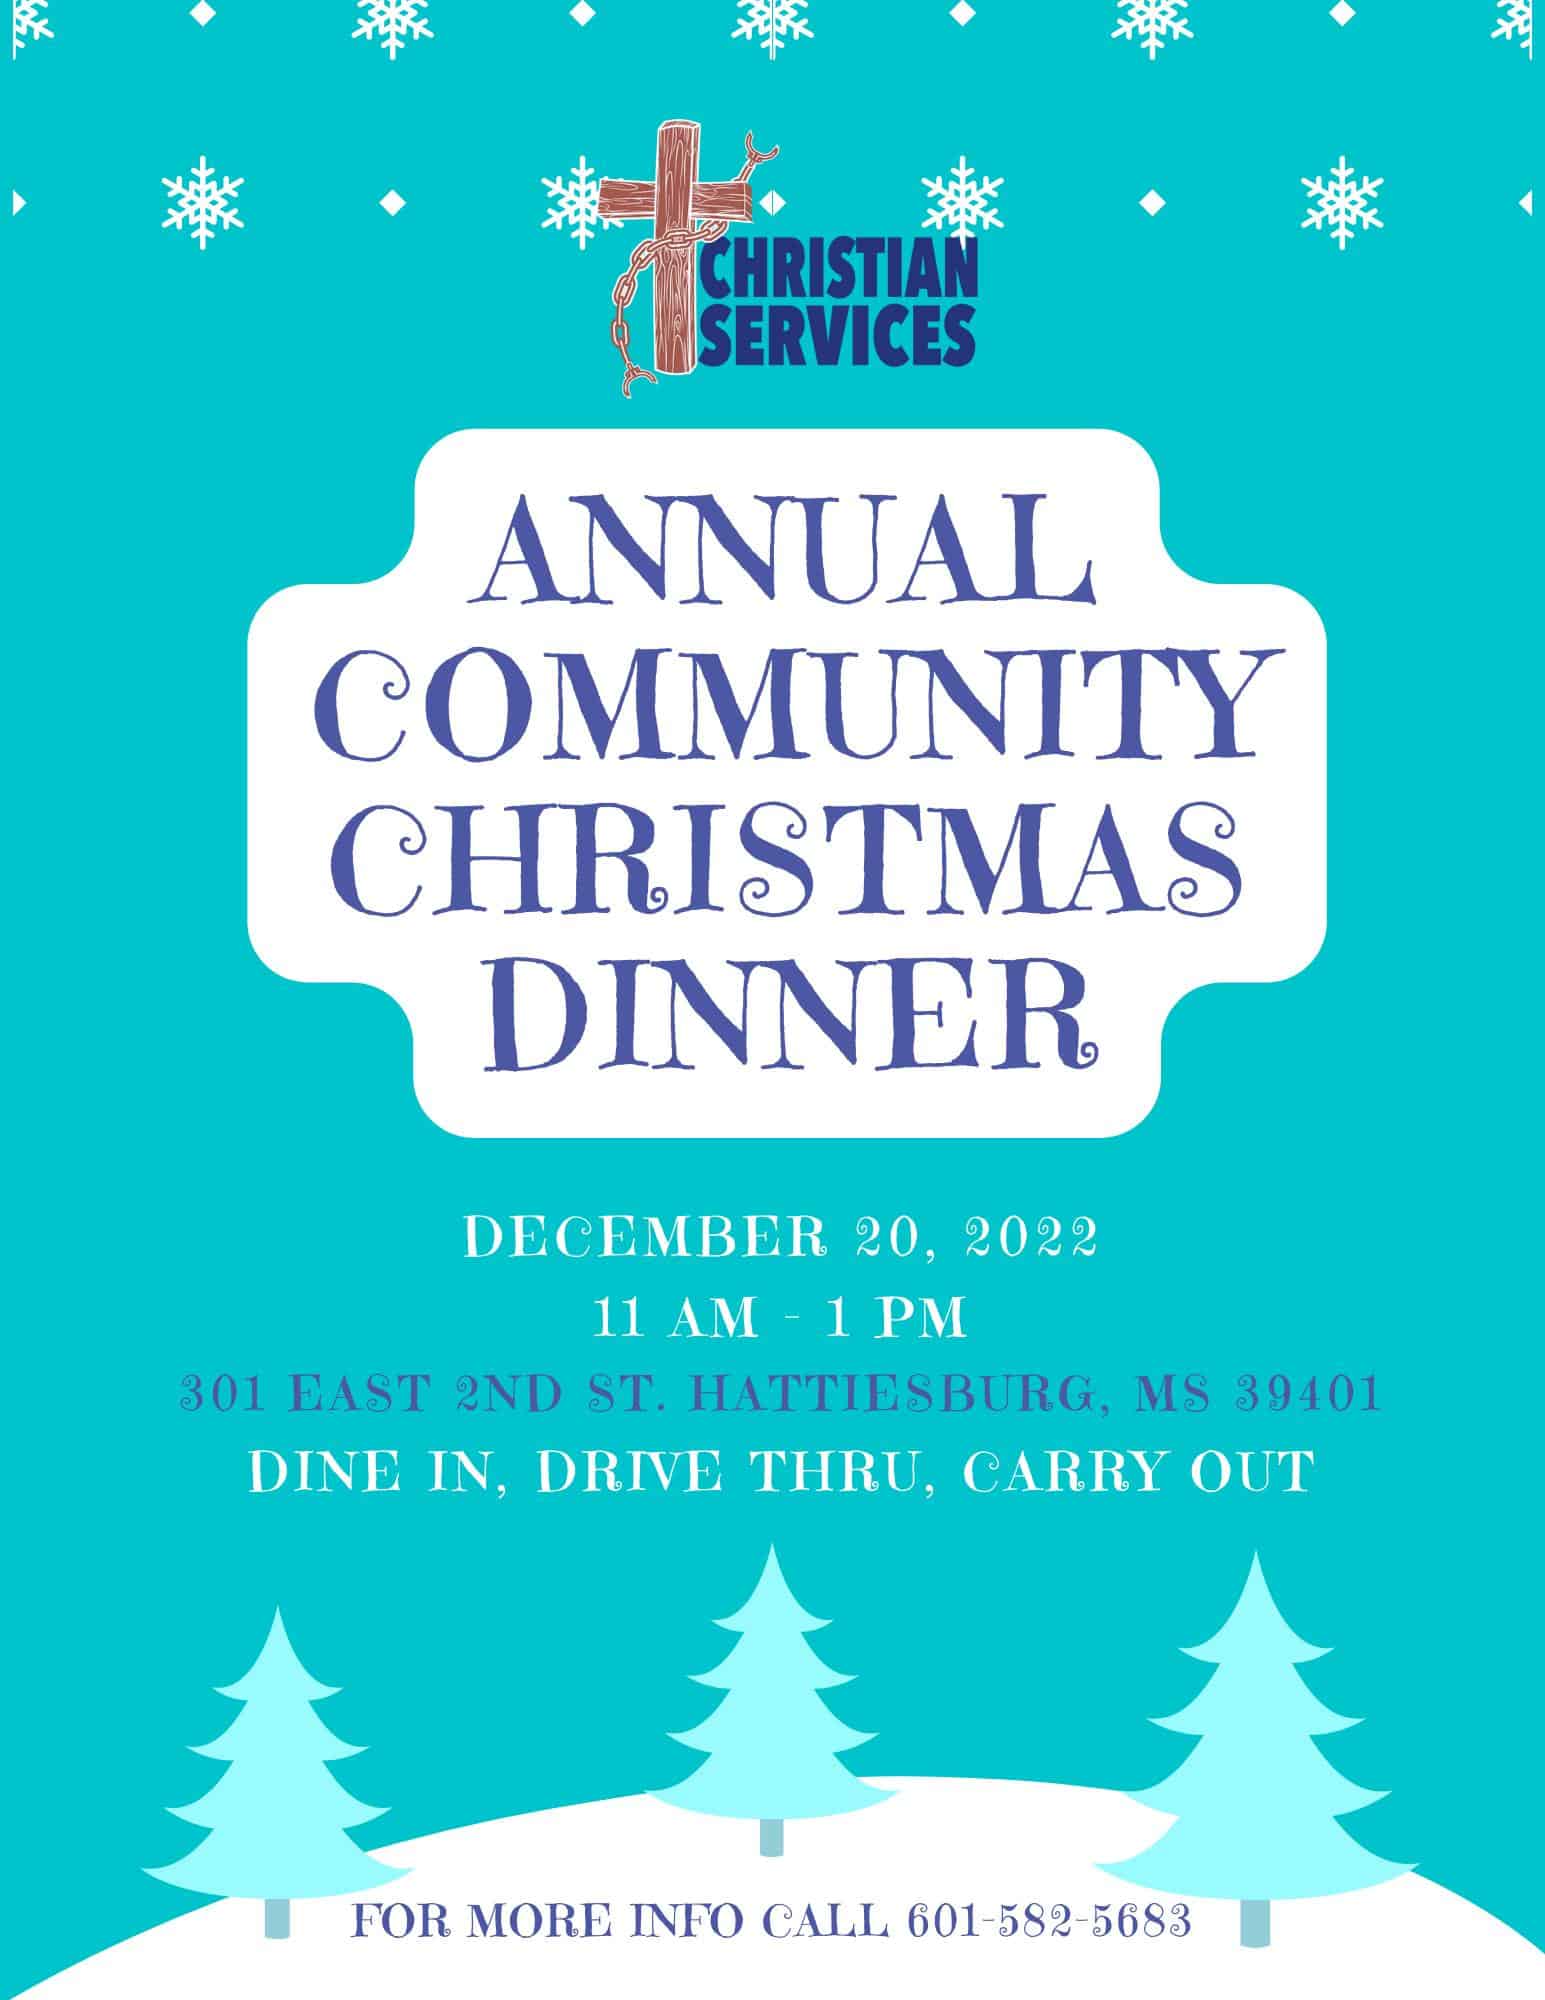 Annual Community Christmas Dinner